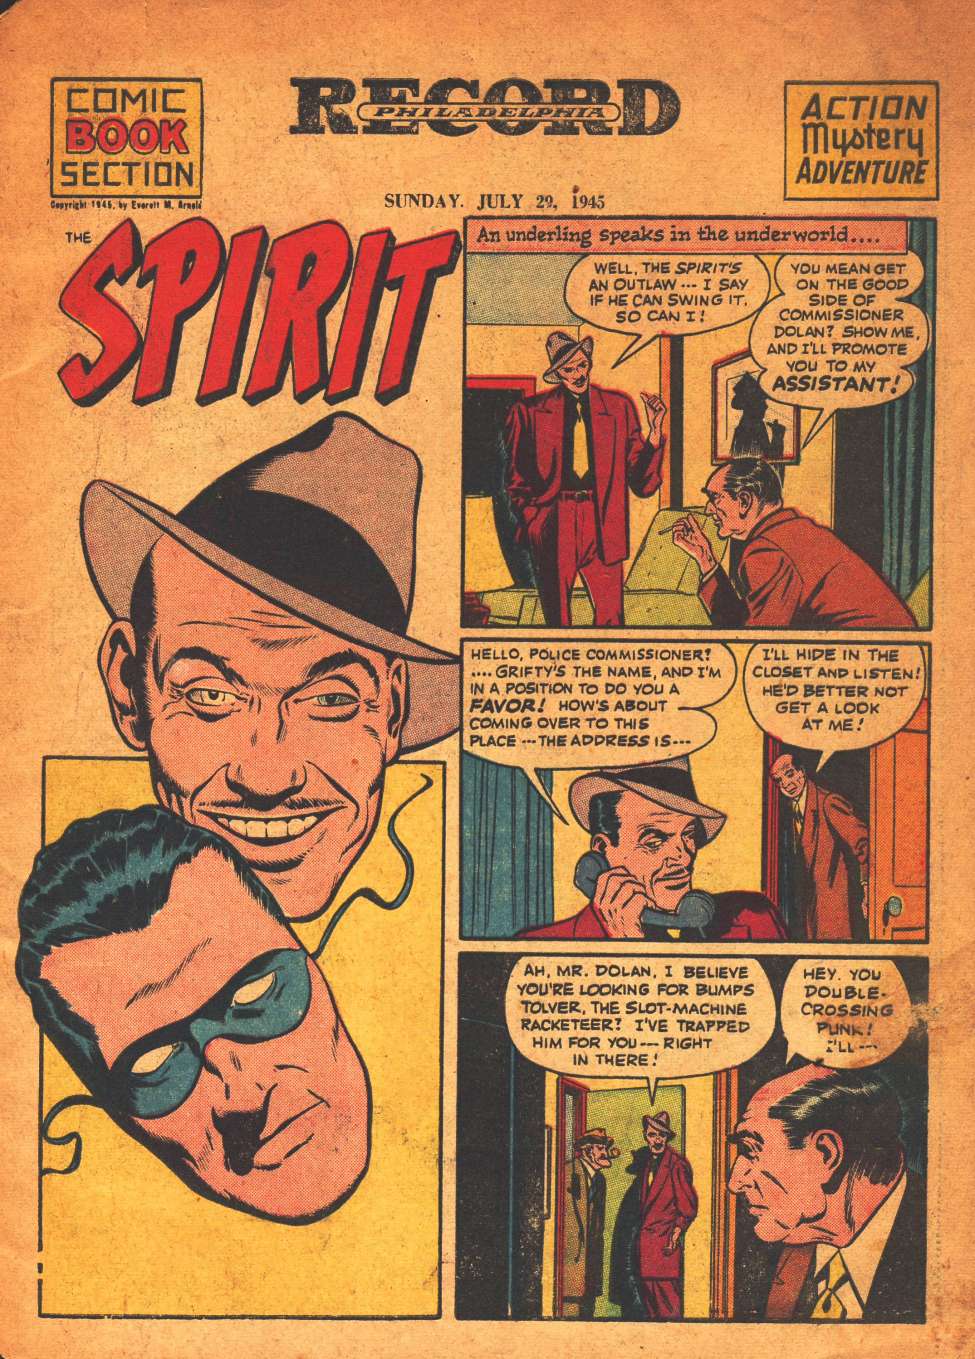 Comic Book Cover For The Spirit (1945-07-29) - Philadelphia Record